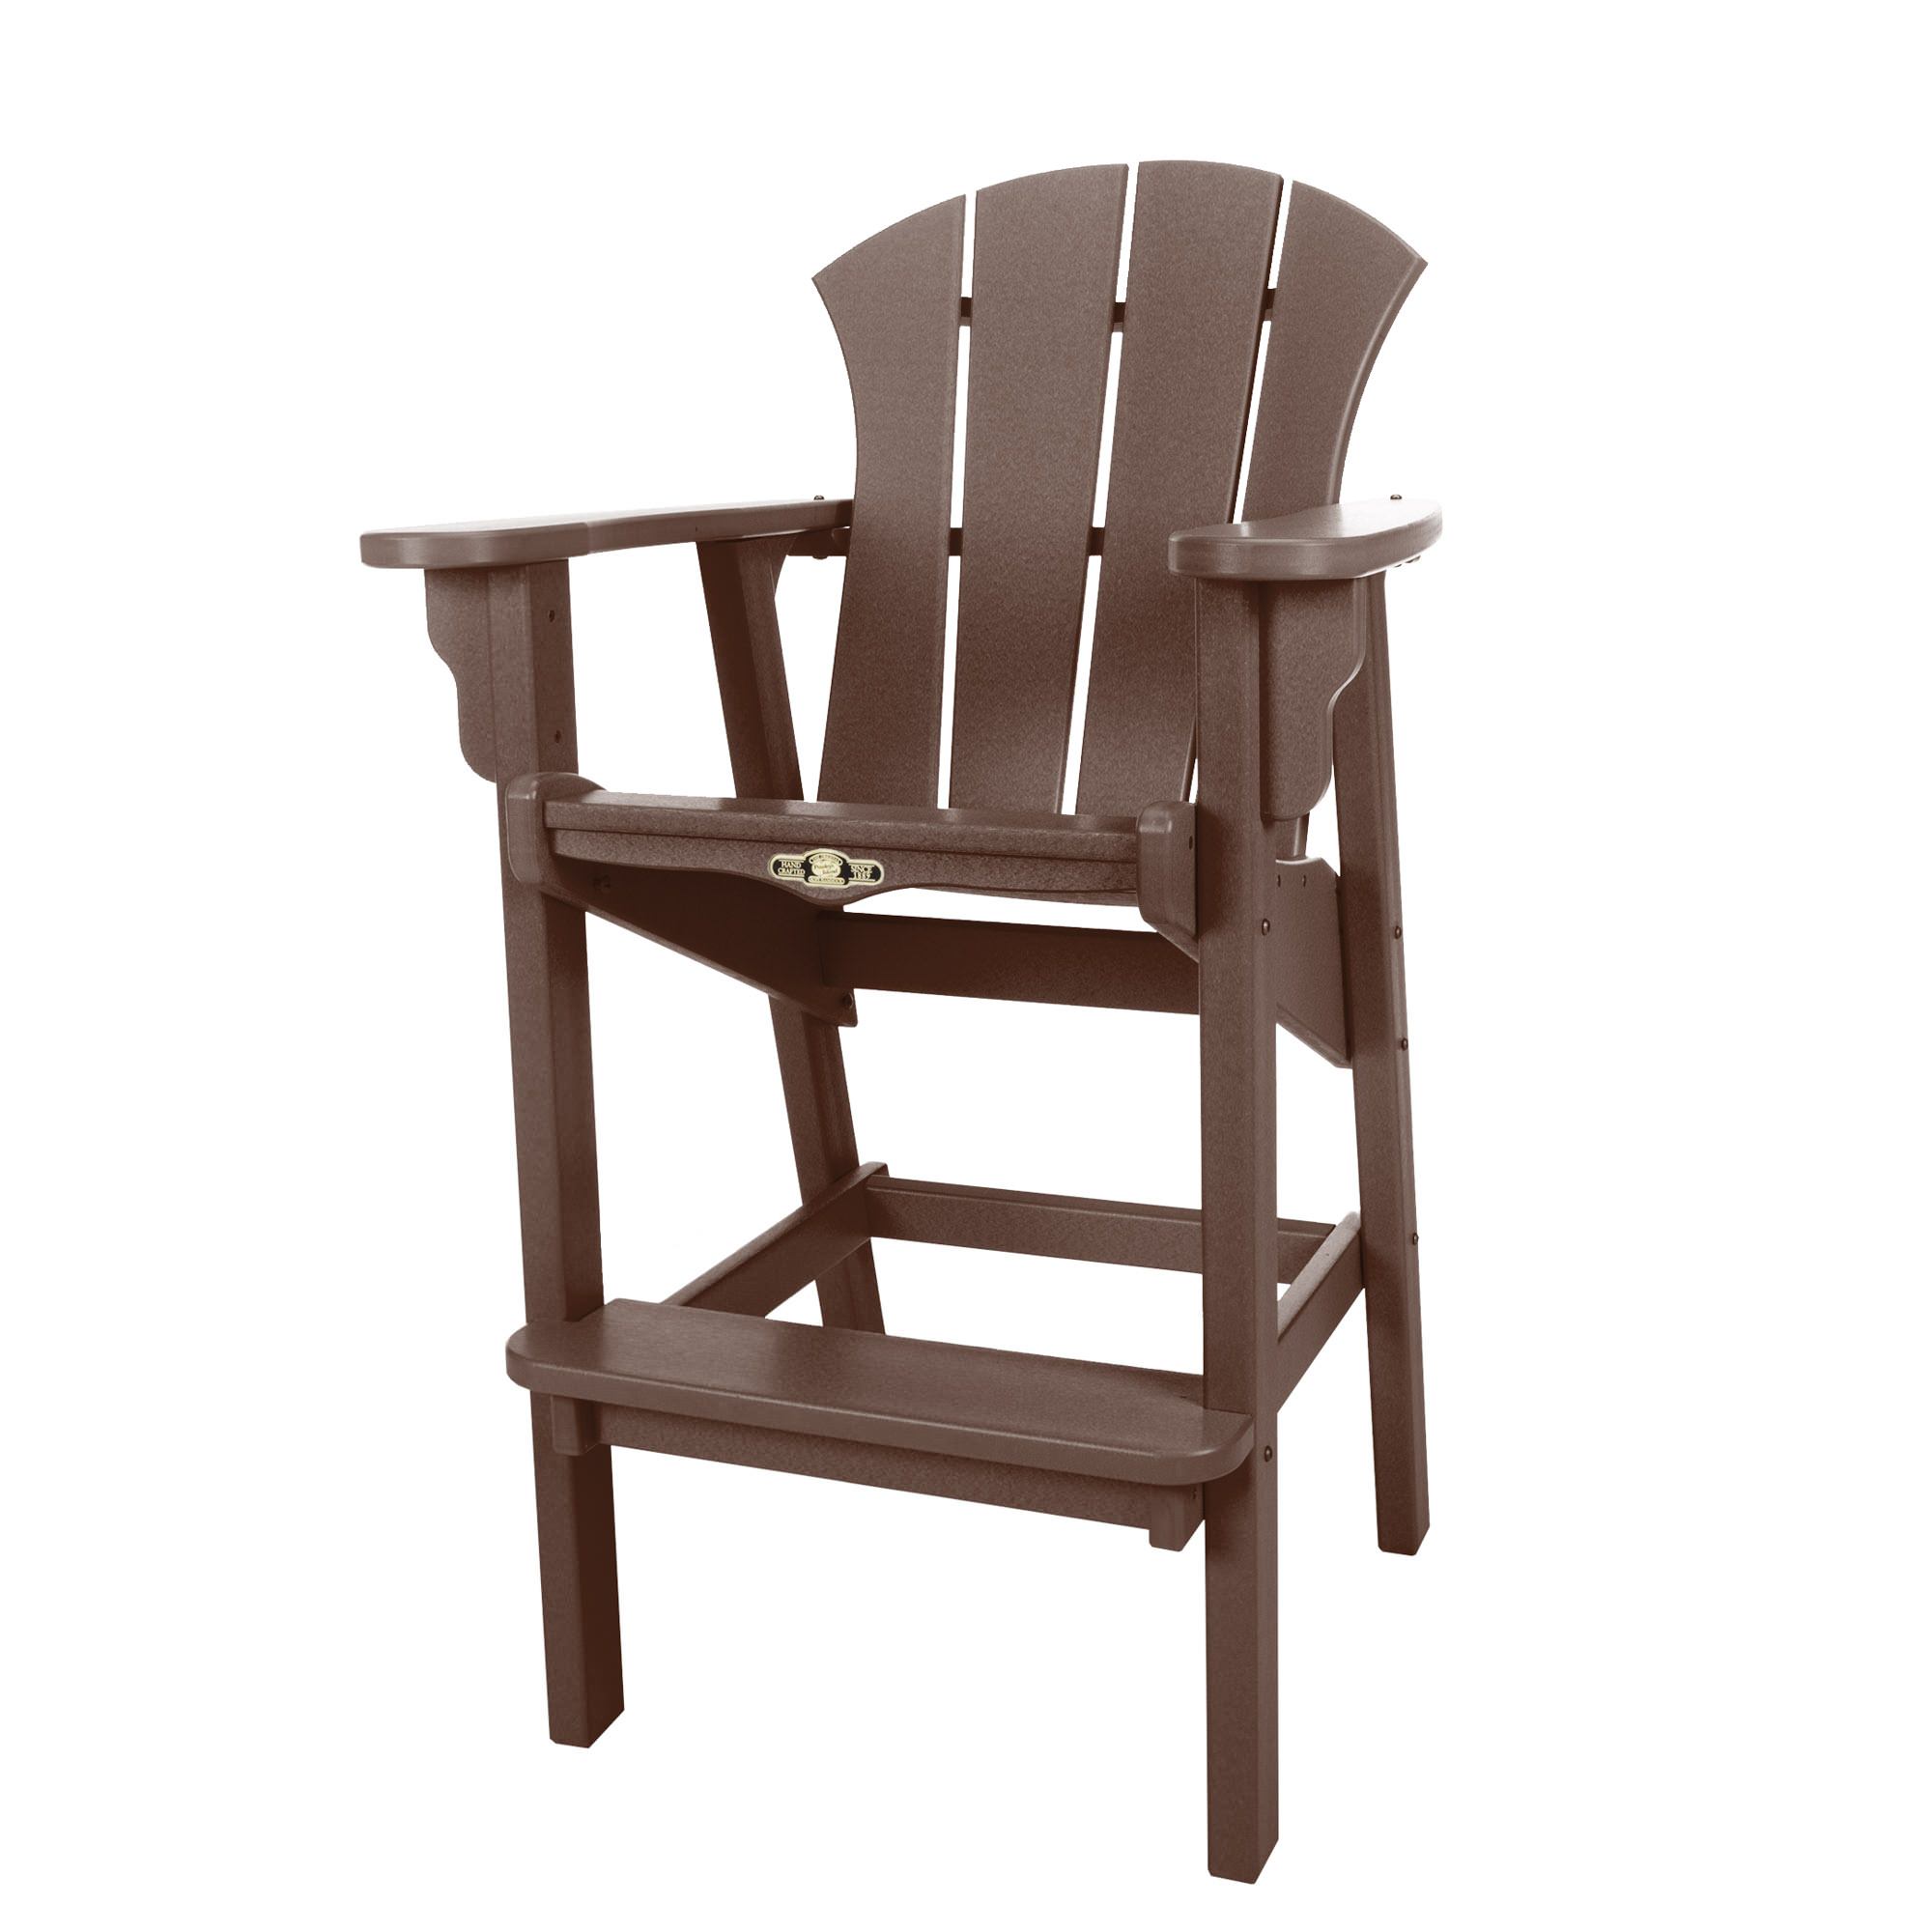 Durawood Sunrise Bar Height Chair | Pawleys Island Hammocks